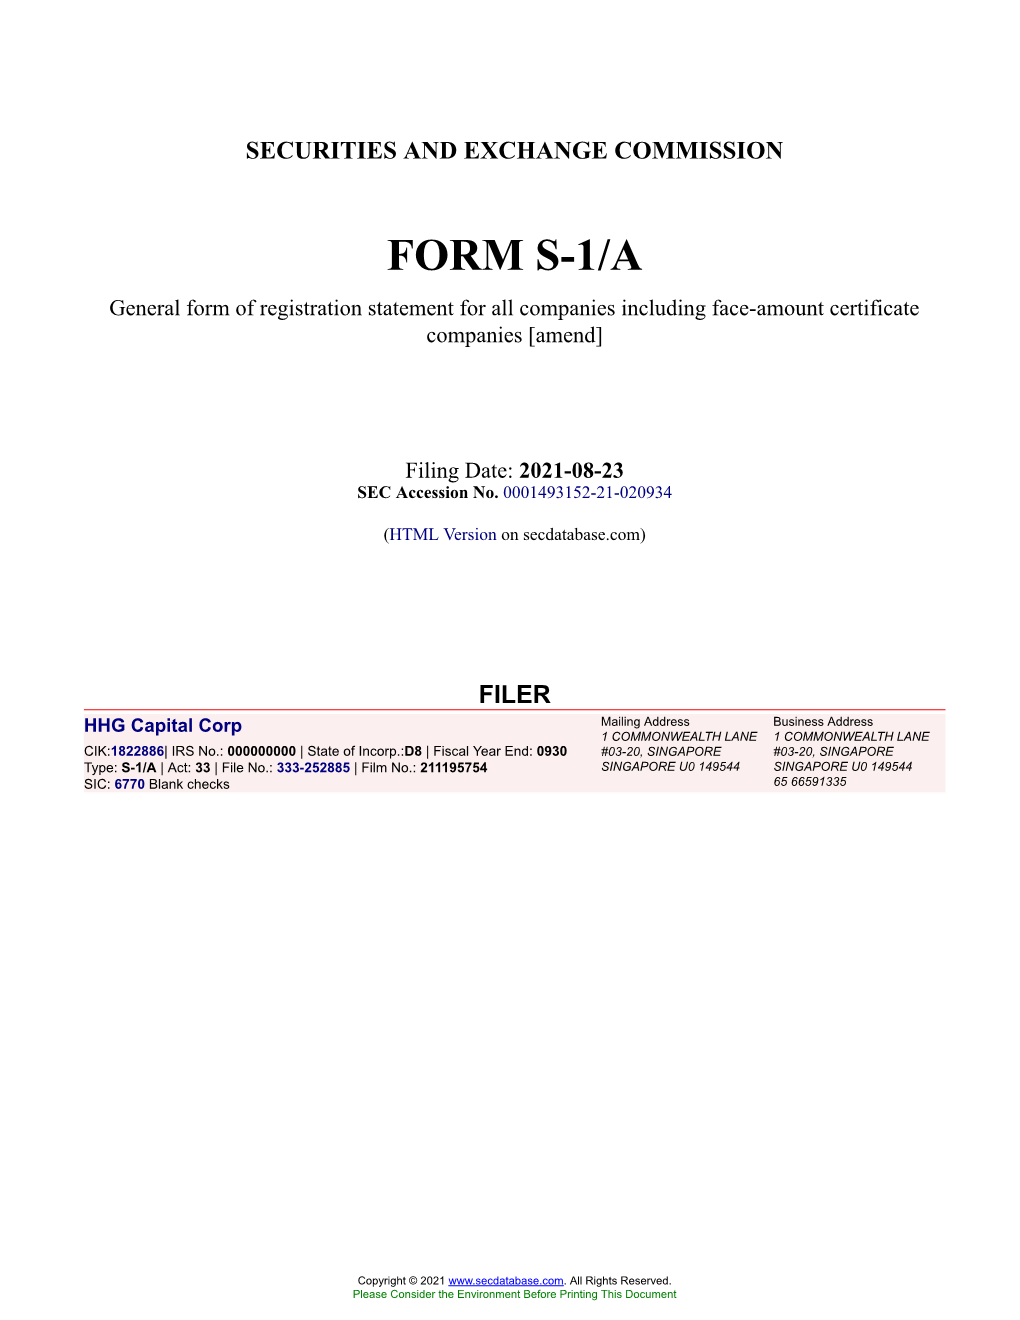 HHG Capital Corp Form S-1/A Filed 2021-08-23